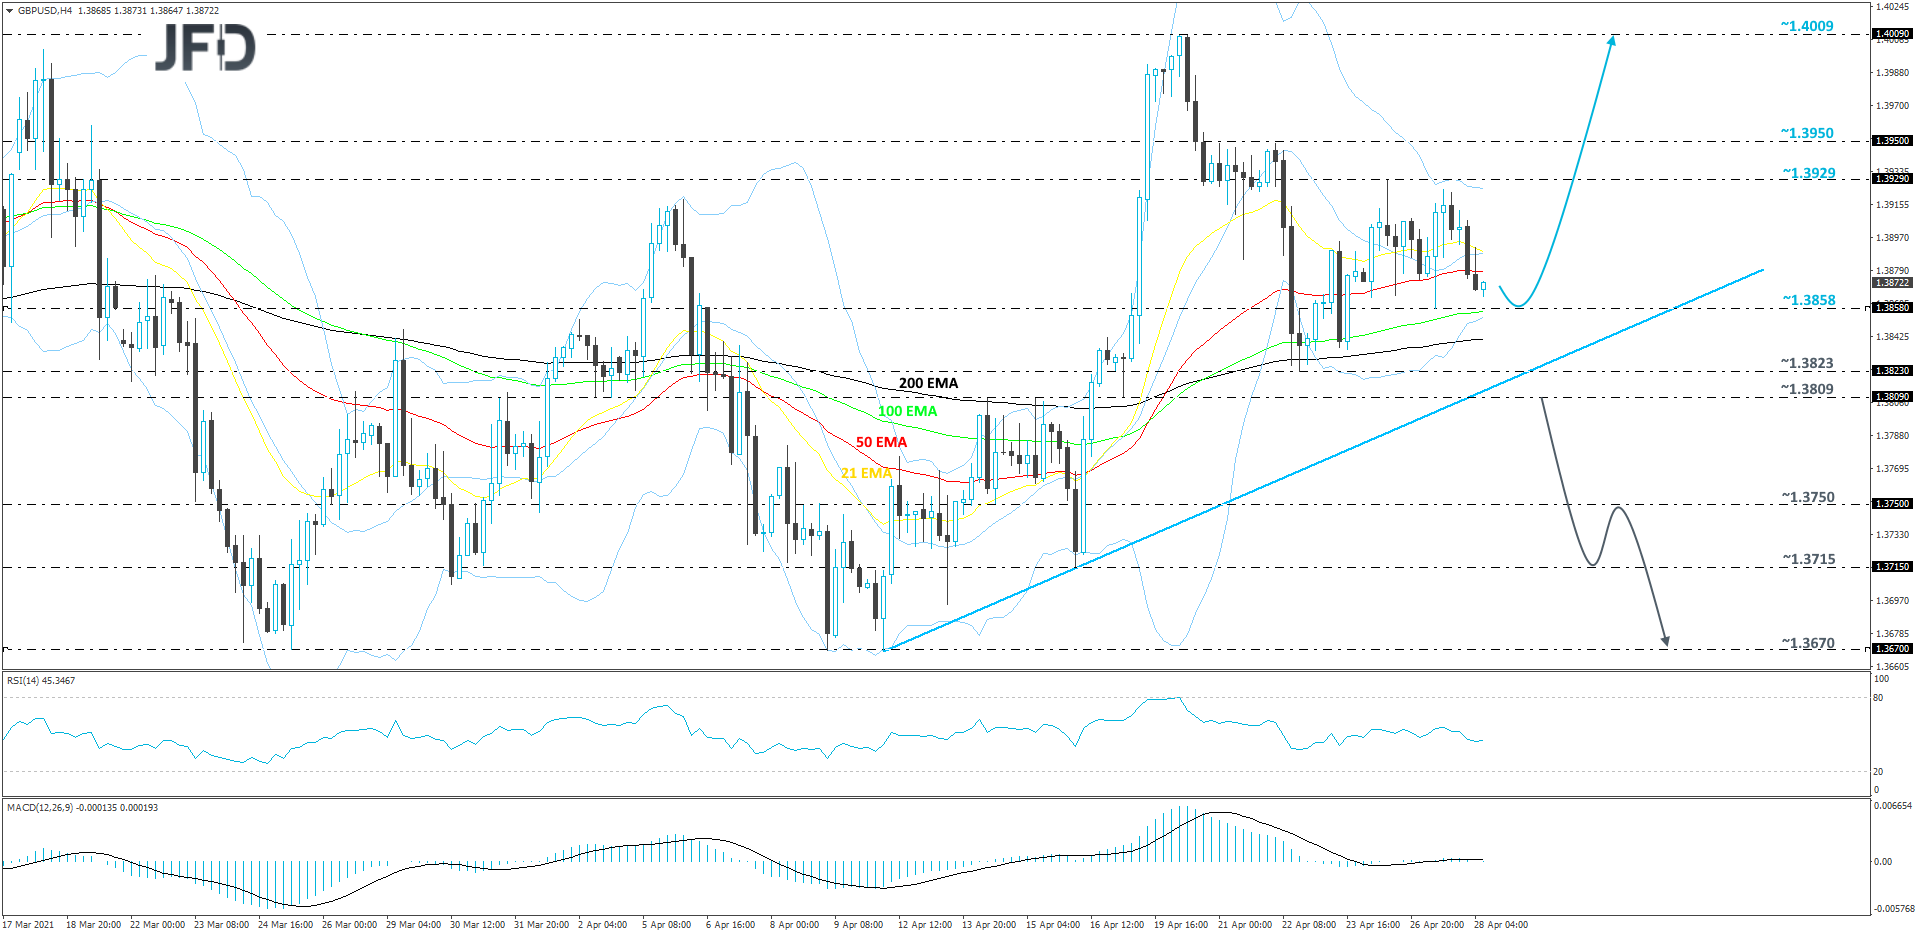 GBP/USD 4-hour chart technical analysis